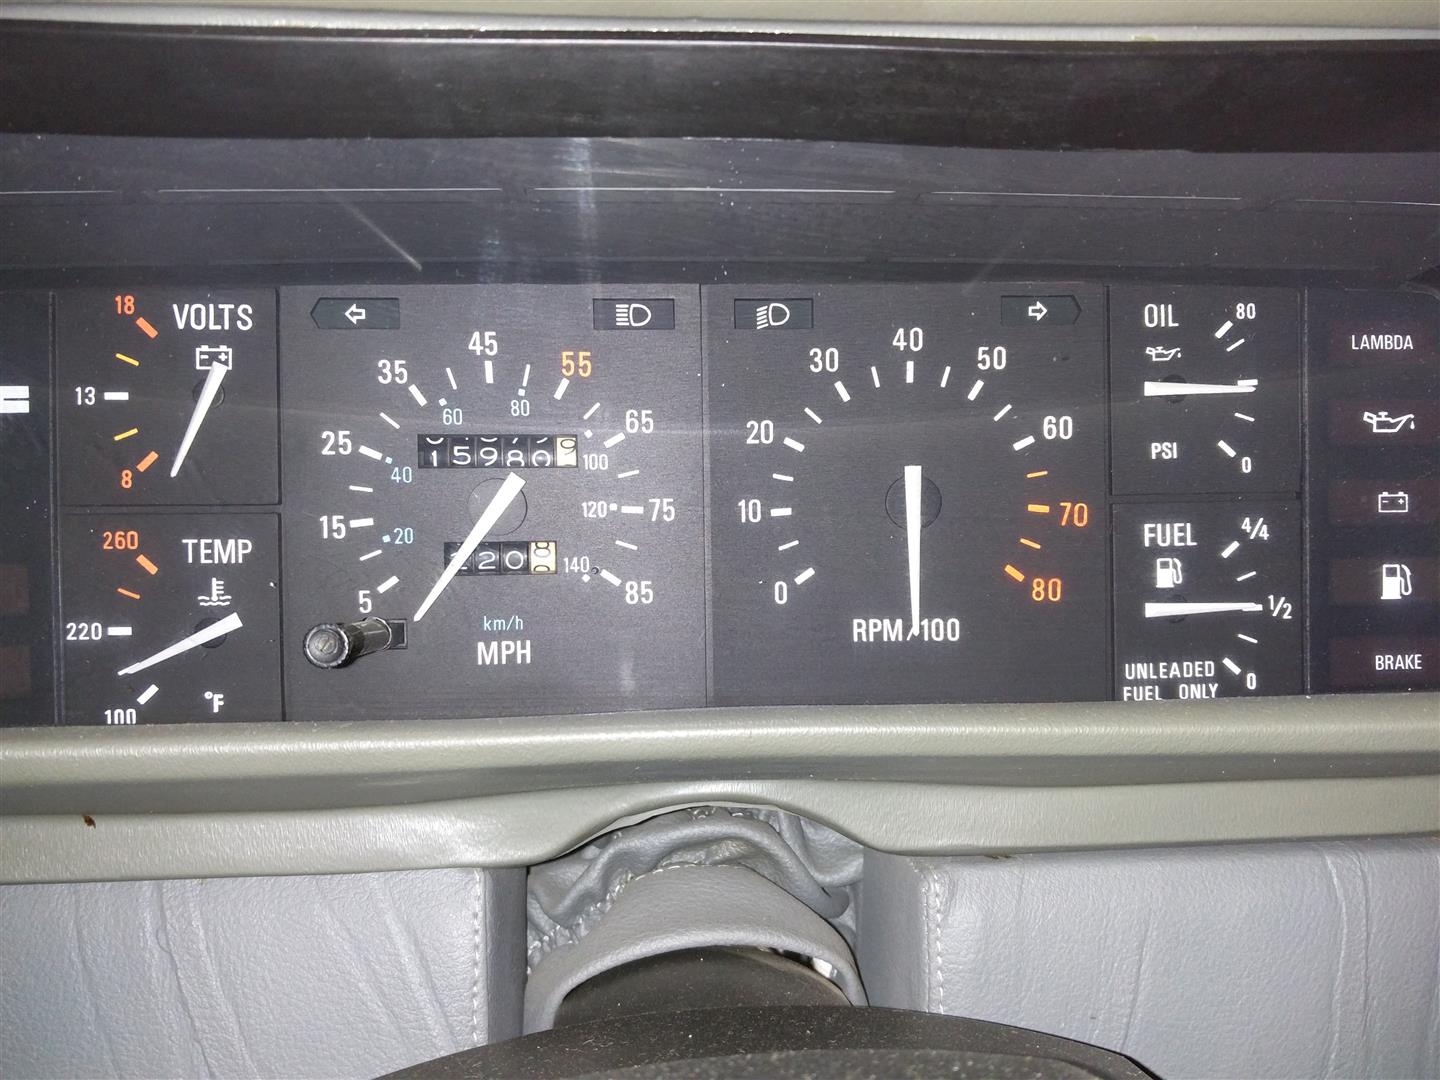 DeLorean #10515 - instrument panel and odometer | DMC10515.com